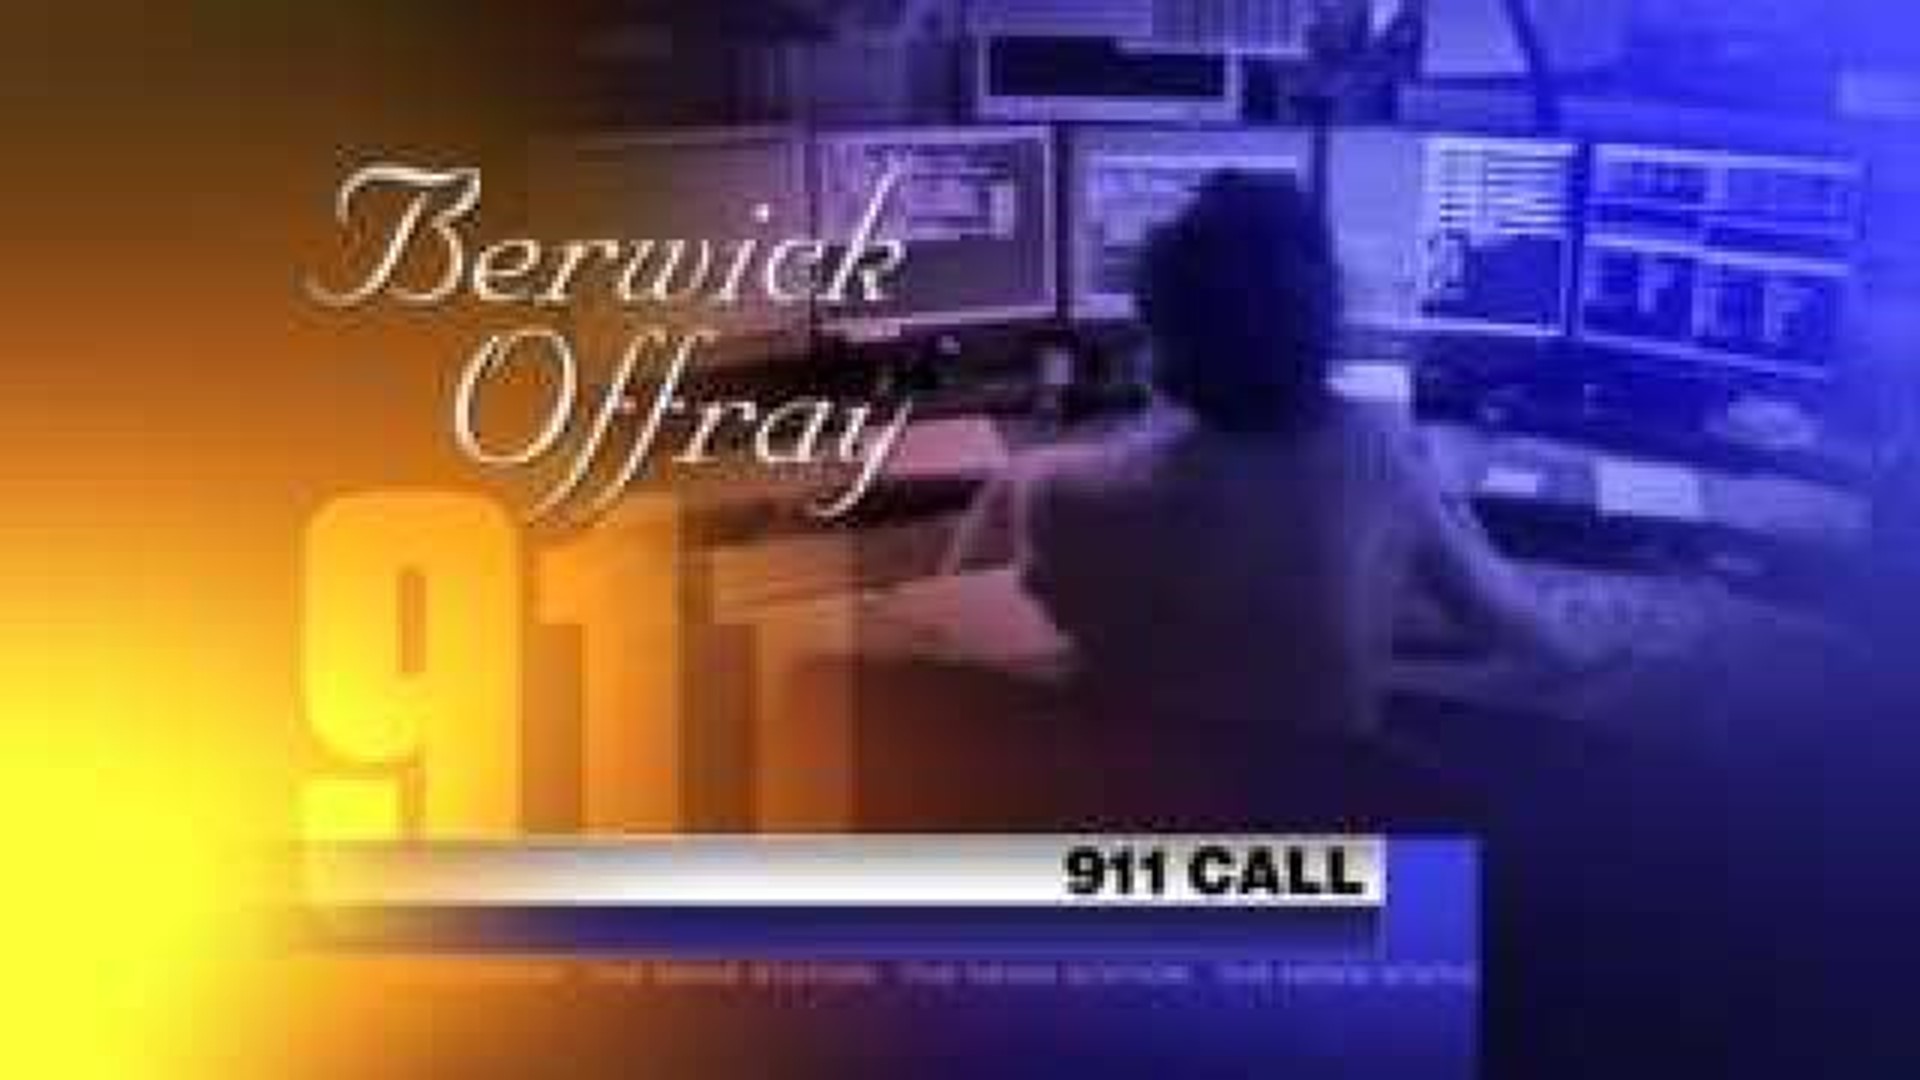 Berwick 911 Call Audio